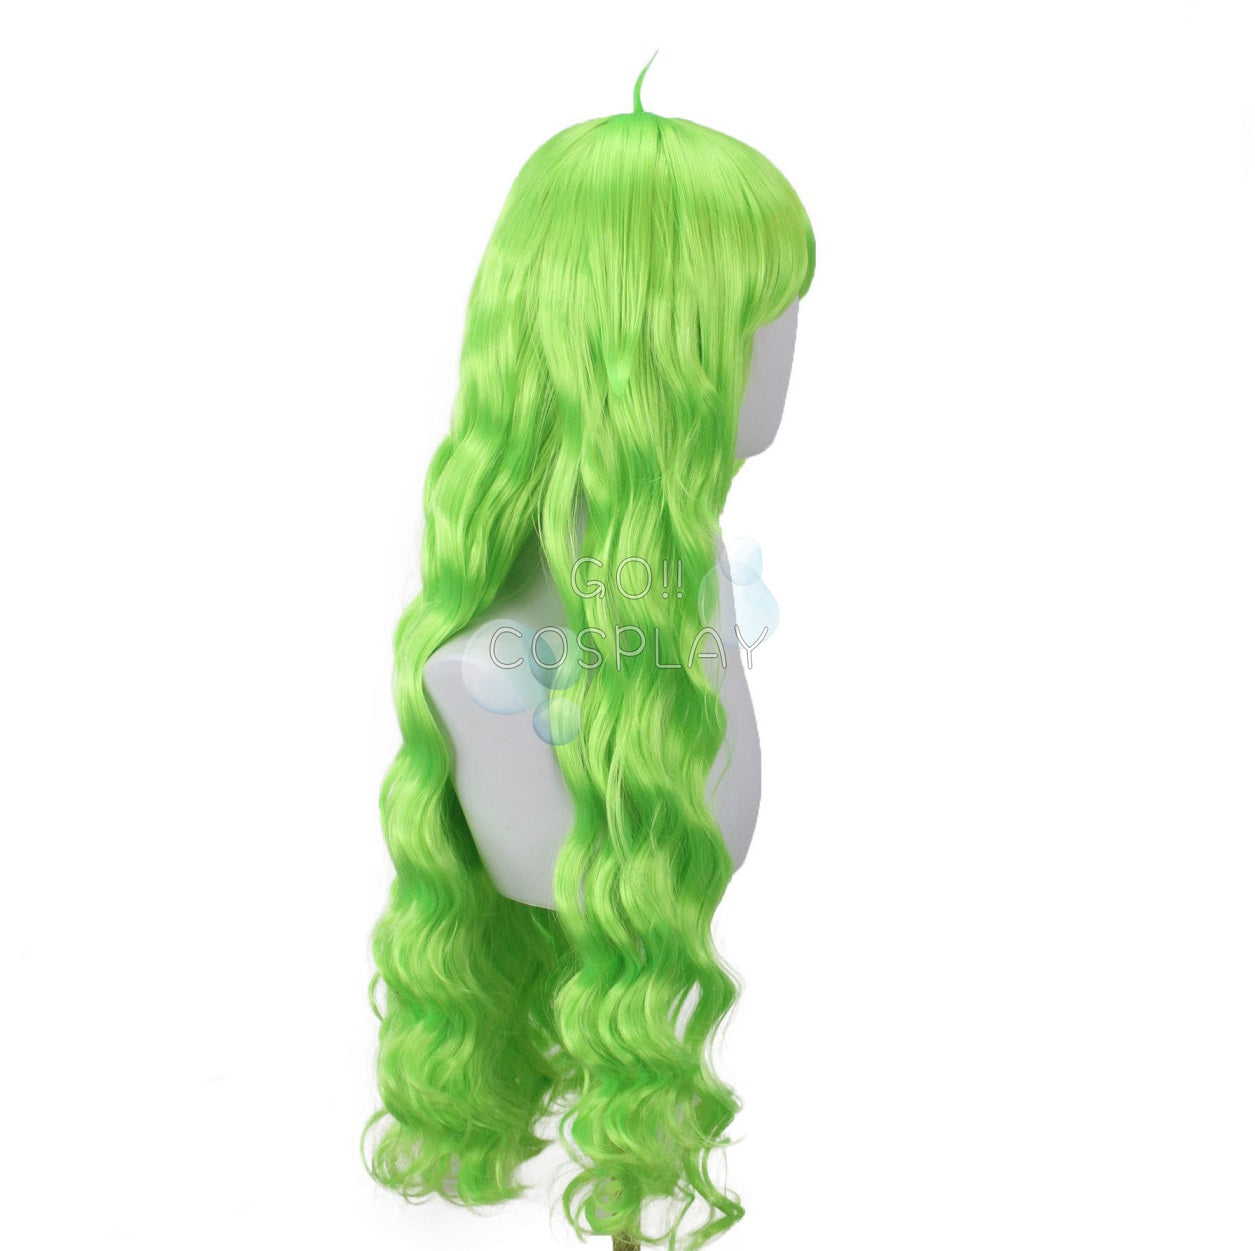 Monet One Piece Cosplay Wig Buy